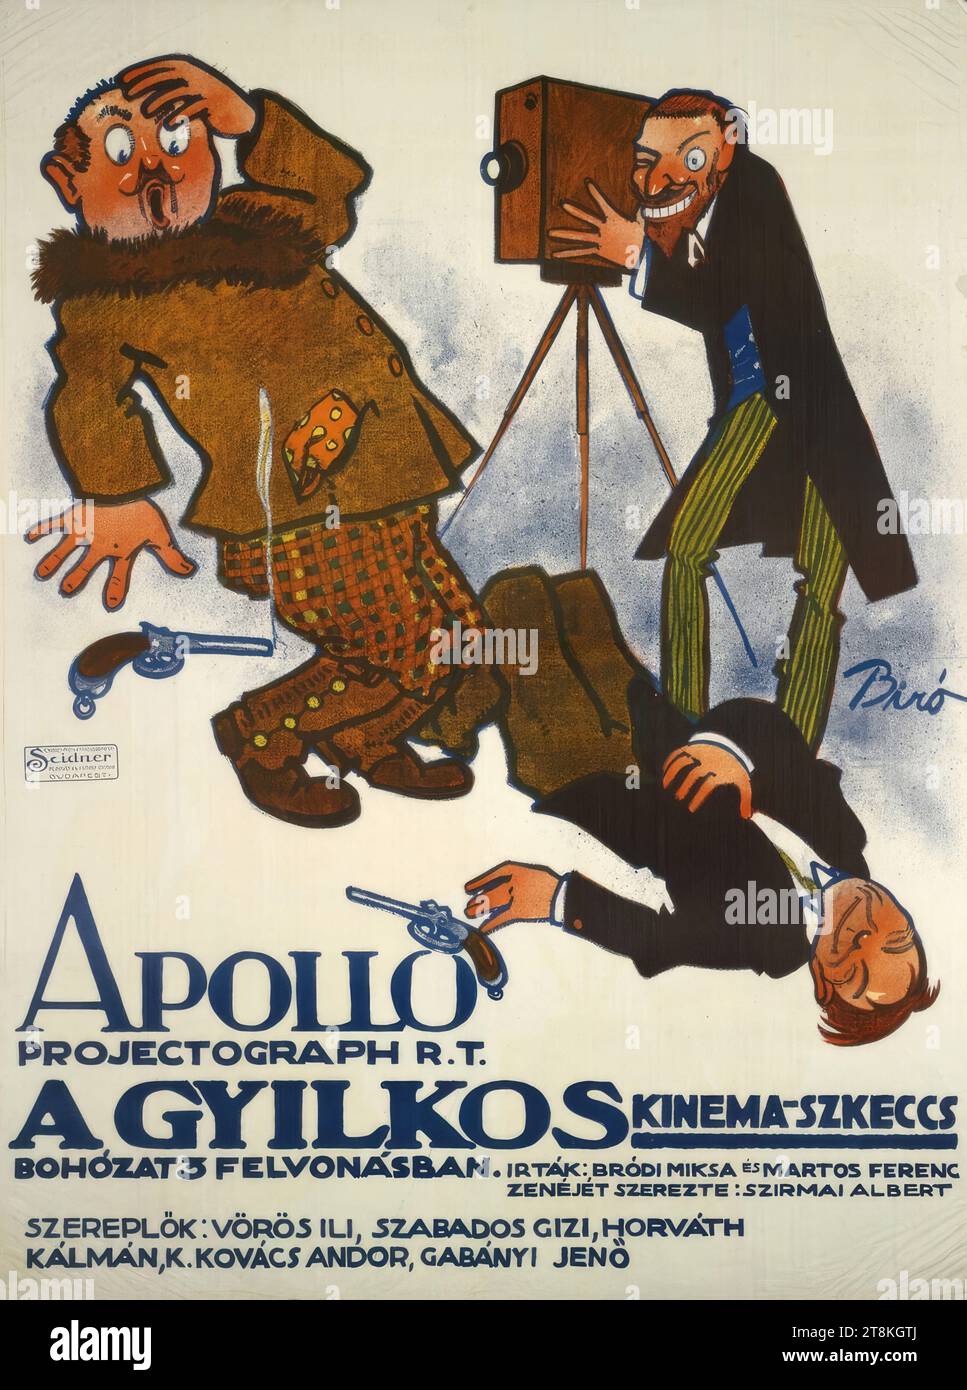 A GYILKOS. Kinema-Szkeccs - Apollo Projektograph Rt., Mihály Biró, Budapest 1886 - 1948 Budapest, 1913, print, color lithograph, sheet: 1260 mm x 950 mm Stock Photo